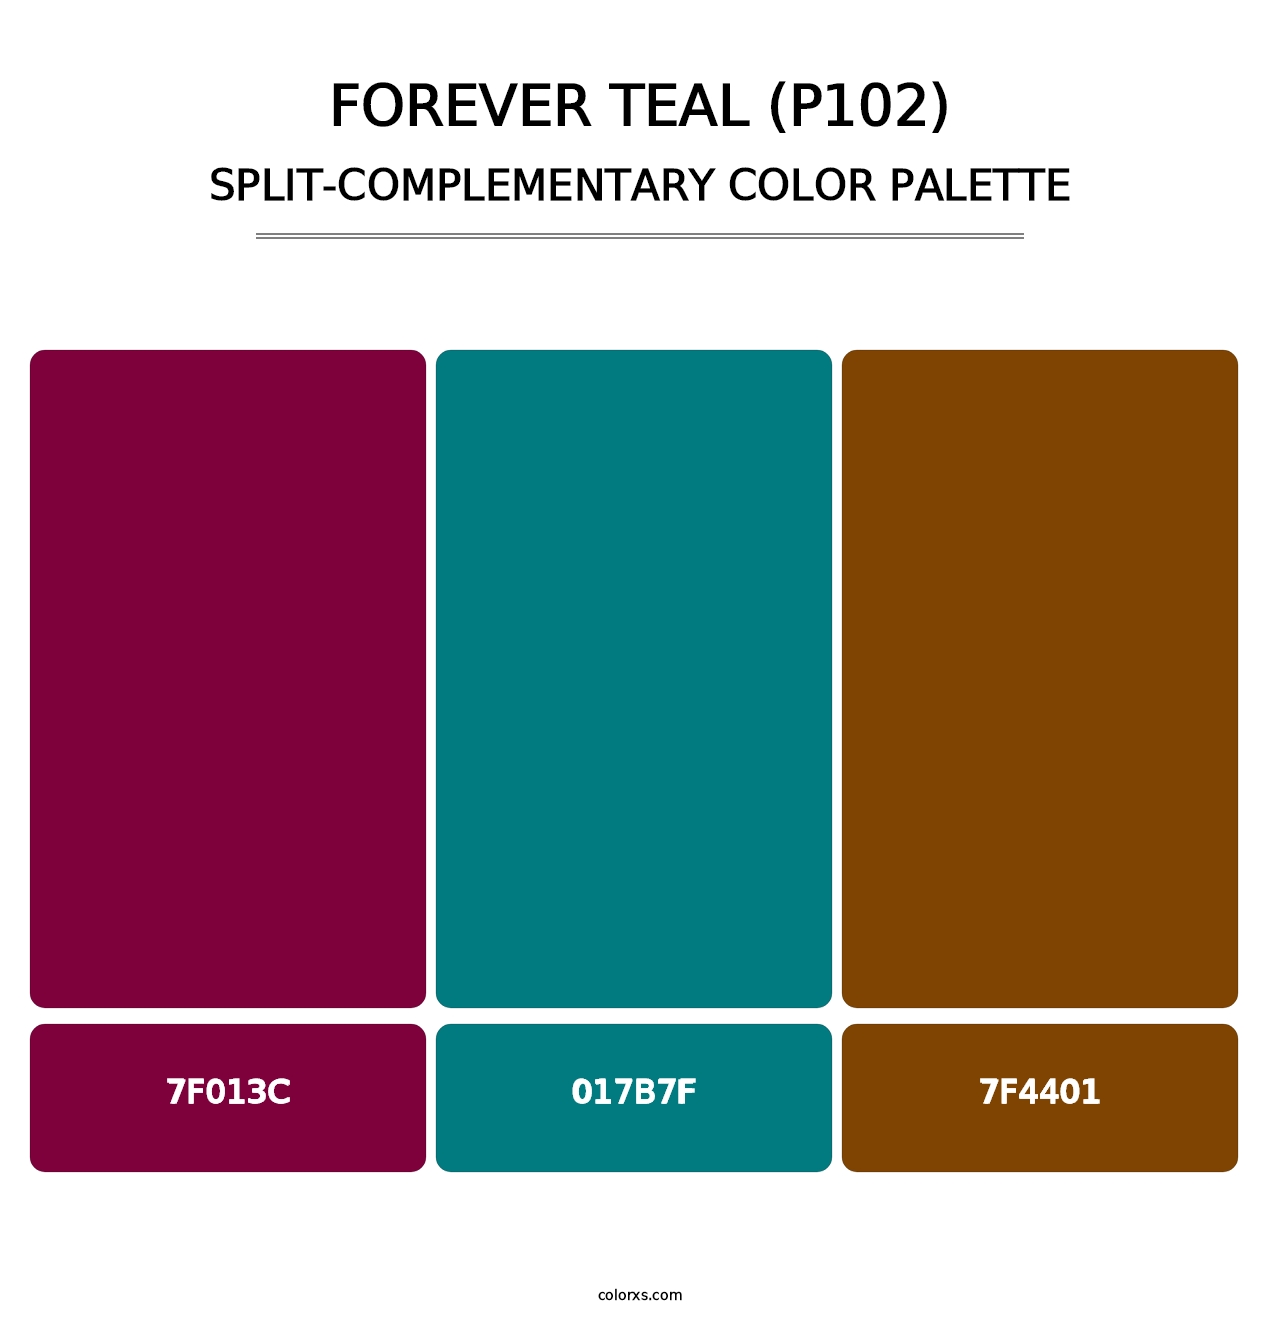 Forever Teal (P102) - Split-Complementary Color Palette